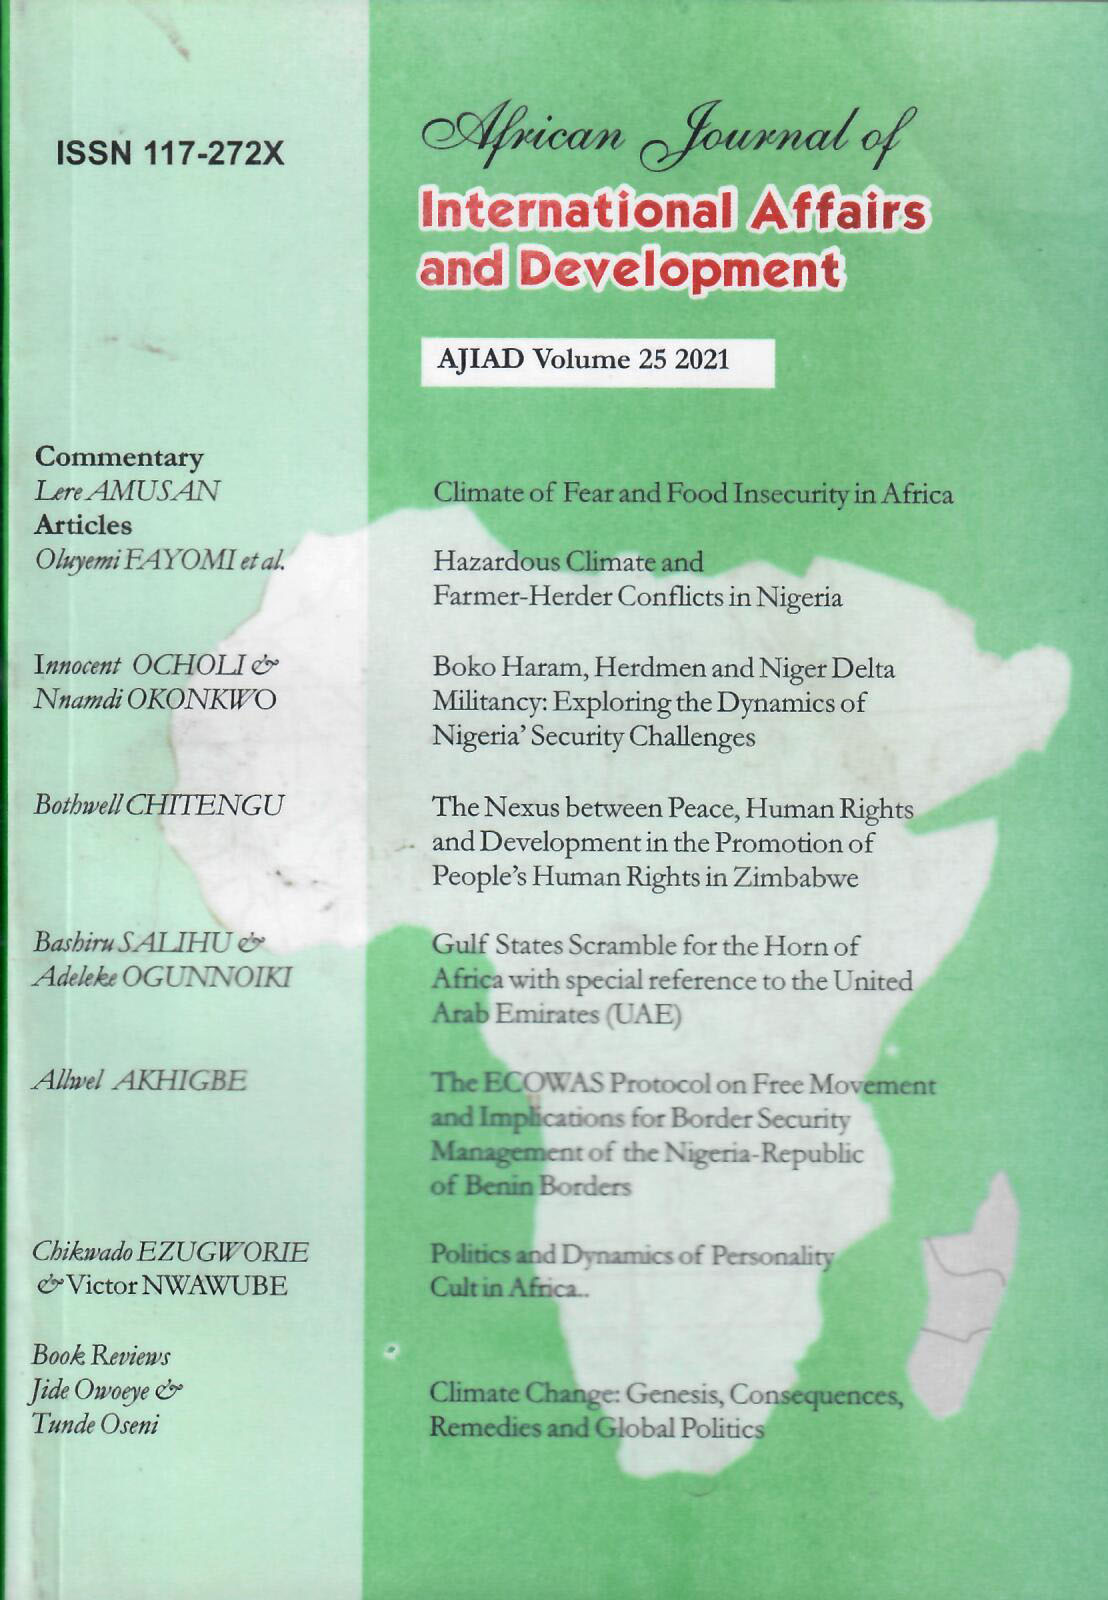 					View Vol. 25 No. 1 (2021): AFRICAN JOURNAL OF INTERNATIONAL AFFAIRS AND DEVELOPMENT
				